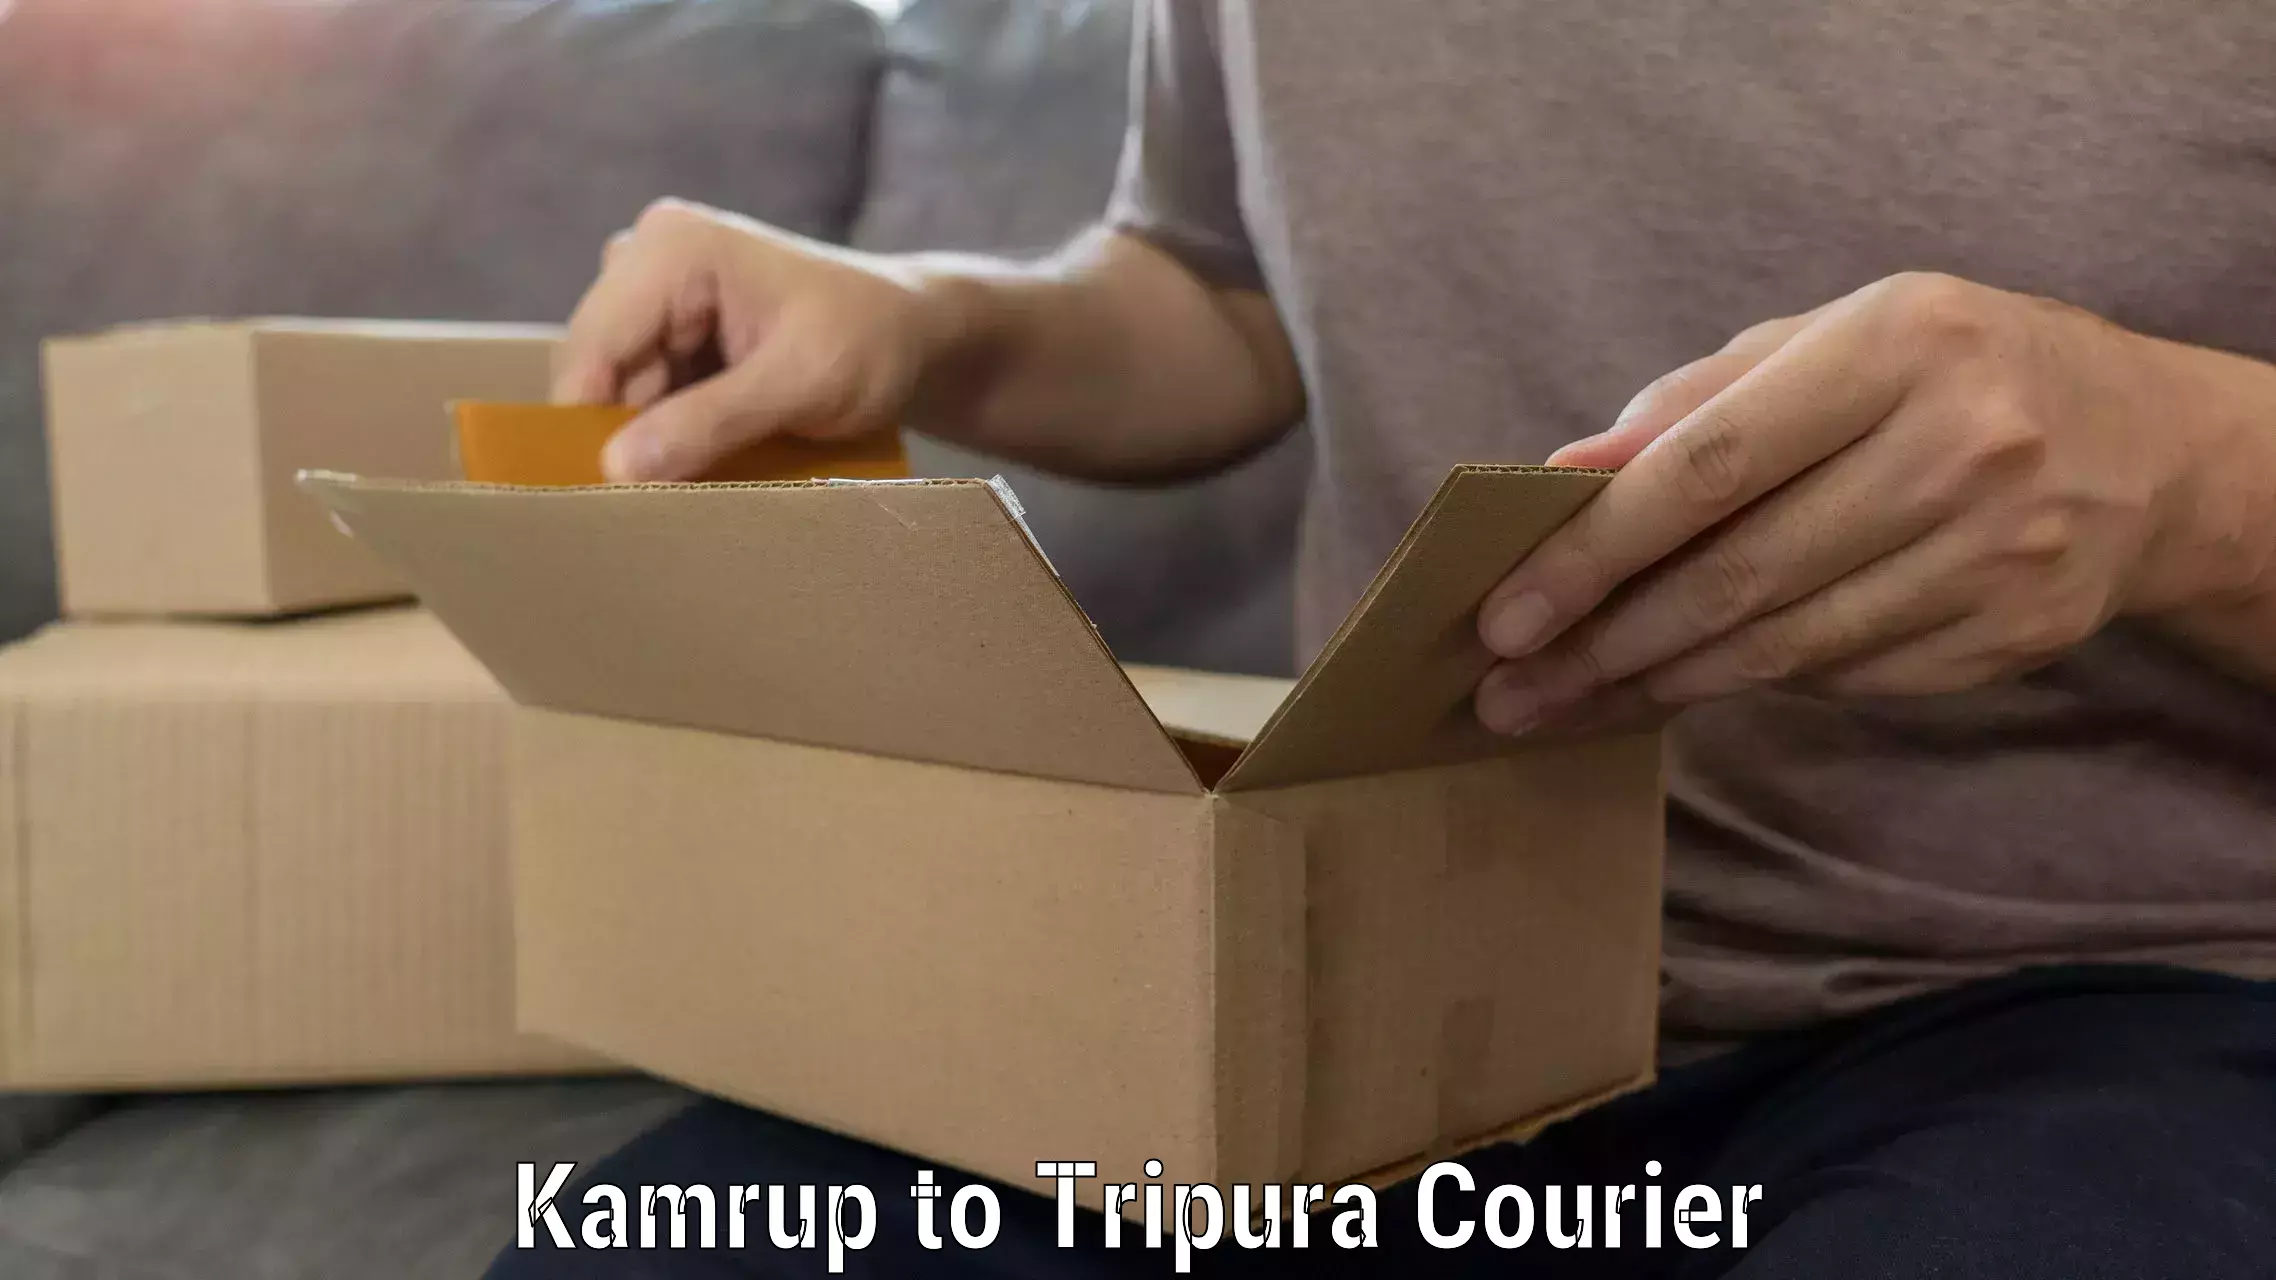 Professional moving company Kamrup to Sonamura